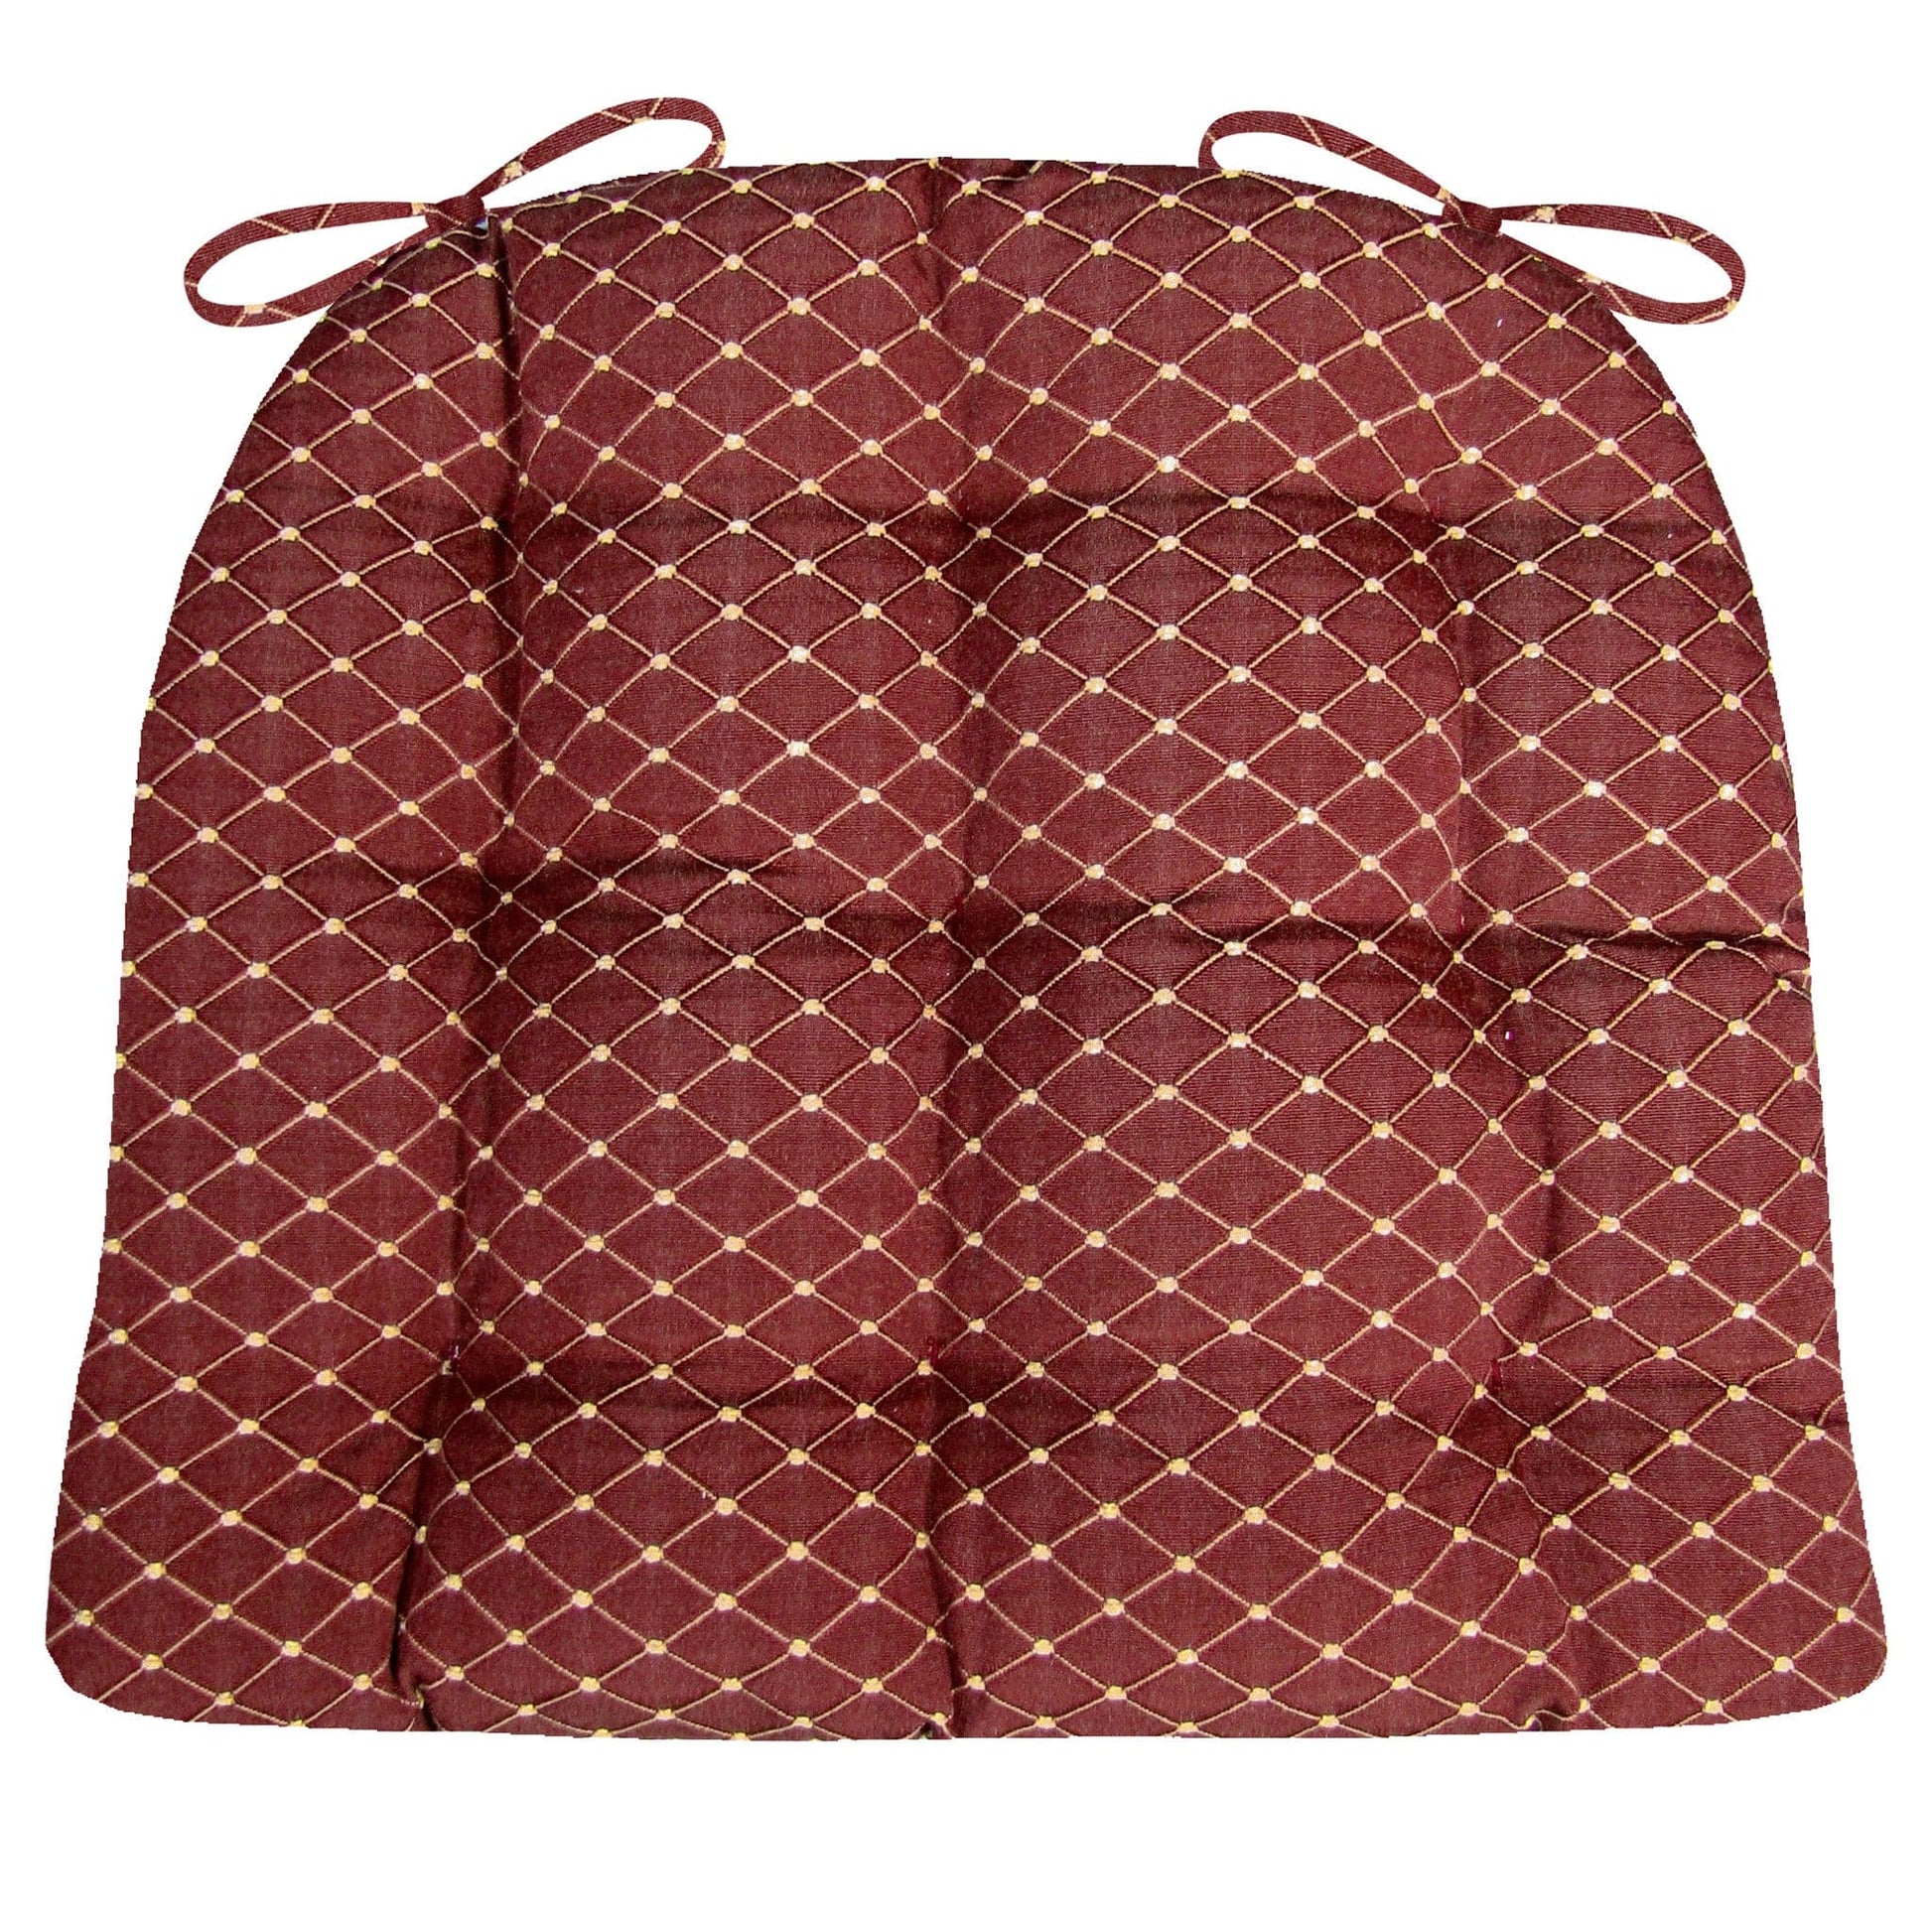 Tiffany Wine Red Brocade Dining Chair Cushions | Barnett Home Decor | Red